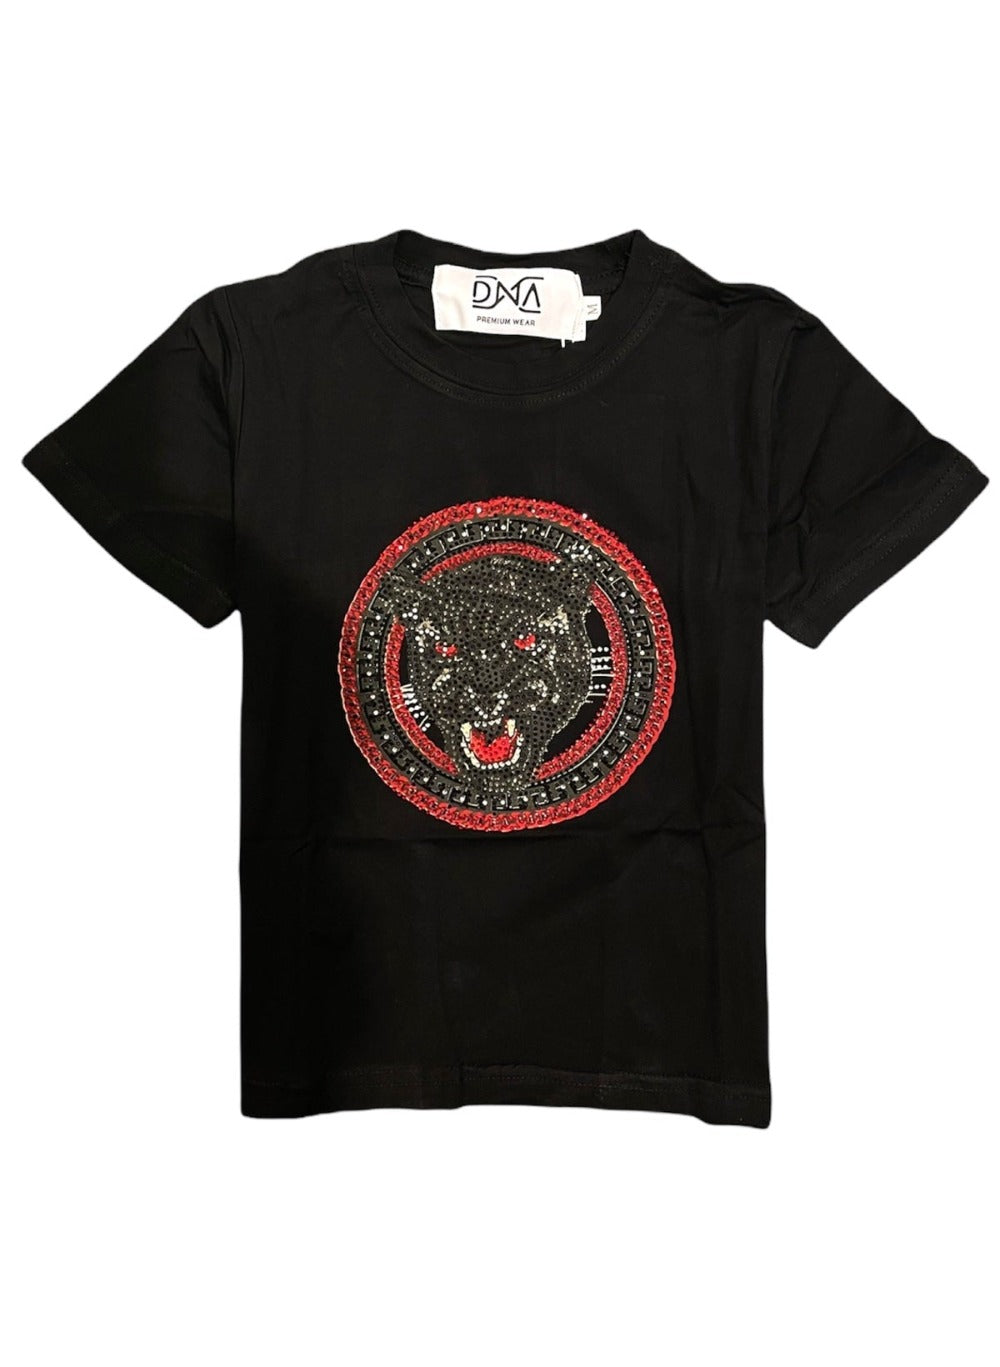 DNA Kids T-Shirt Panther-Black-Red